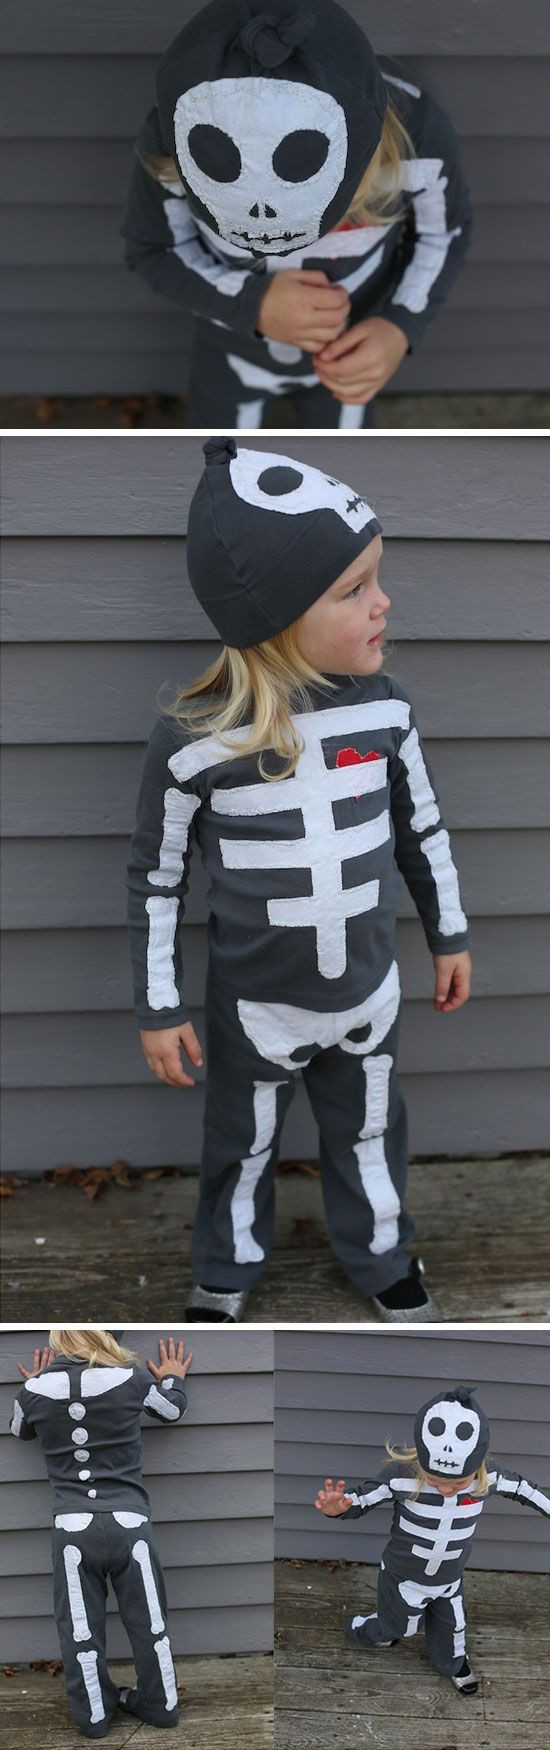 Skeleton Costume DIY
 25 best ideas about Skeleton Costumes on Pinterest